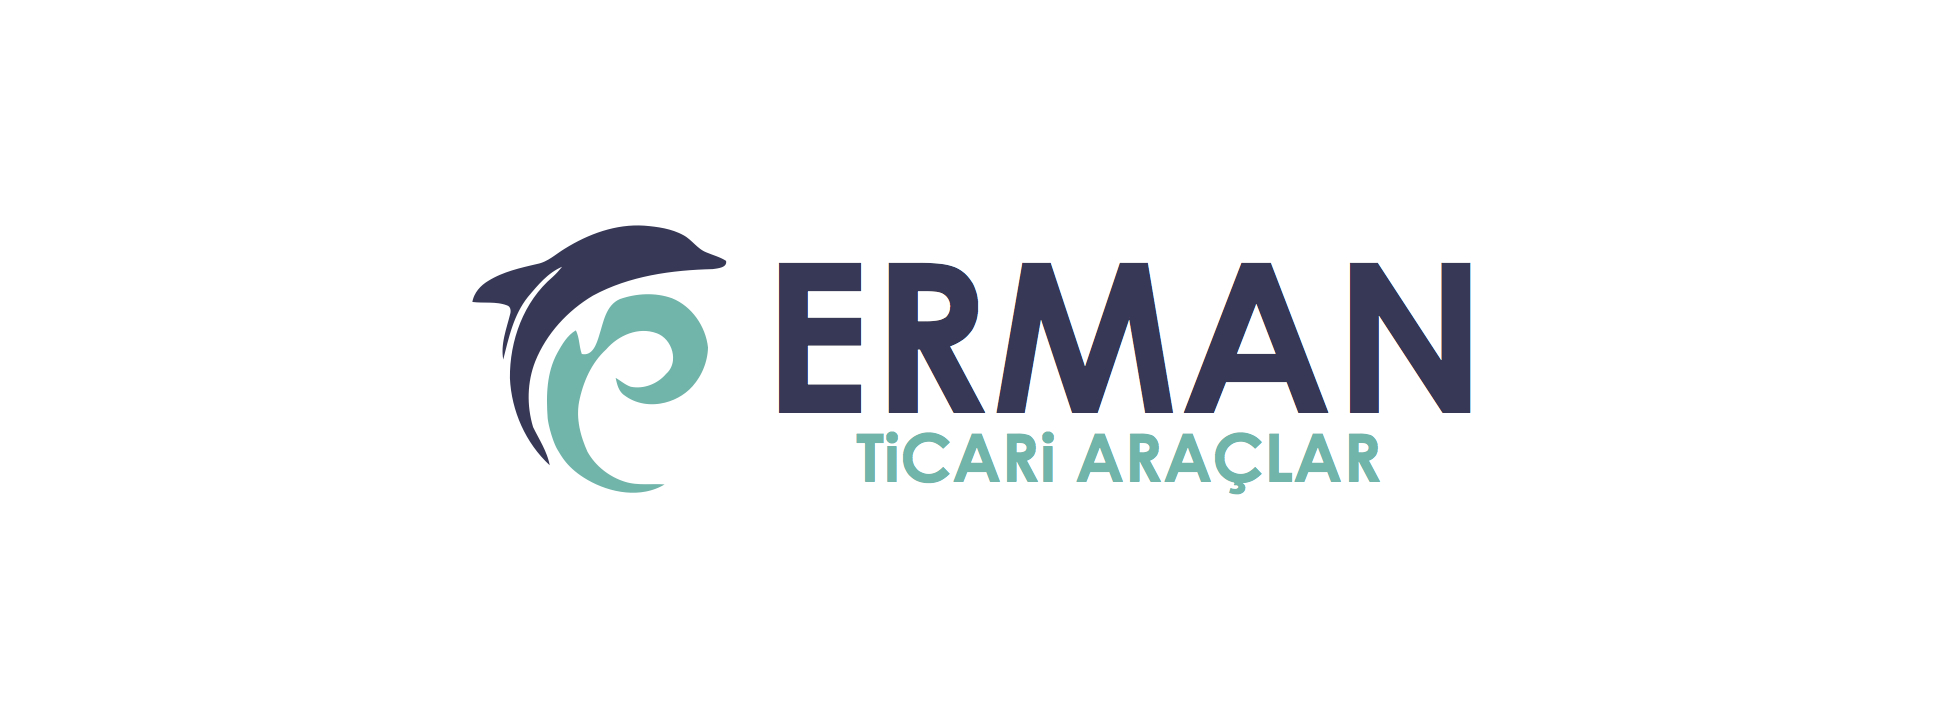 erman-ticari-araclar_logo.jpg